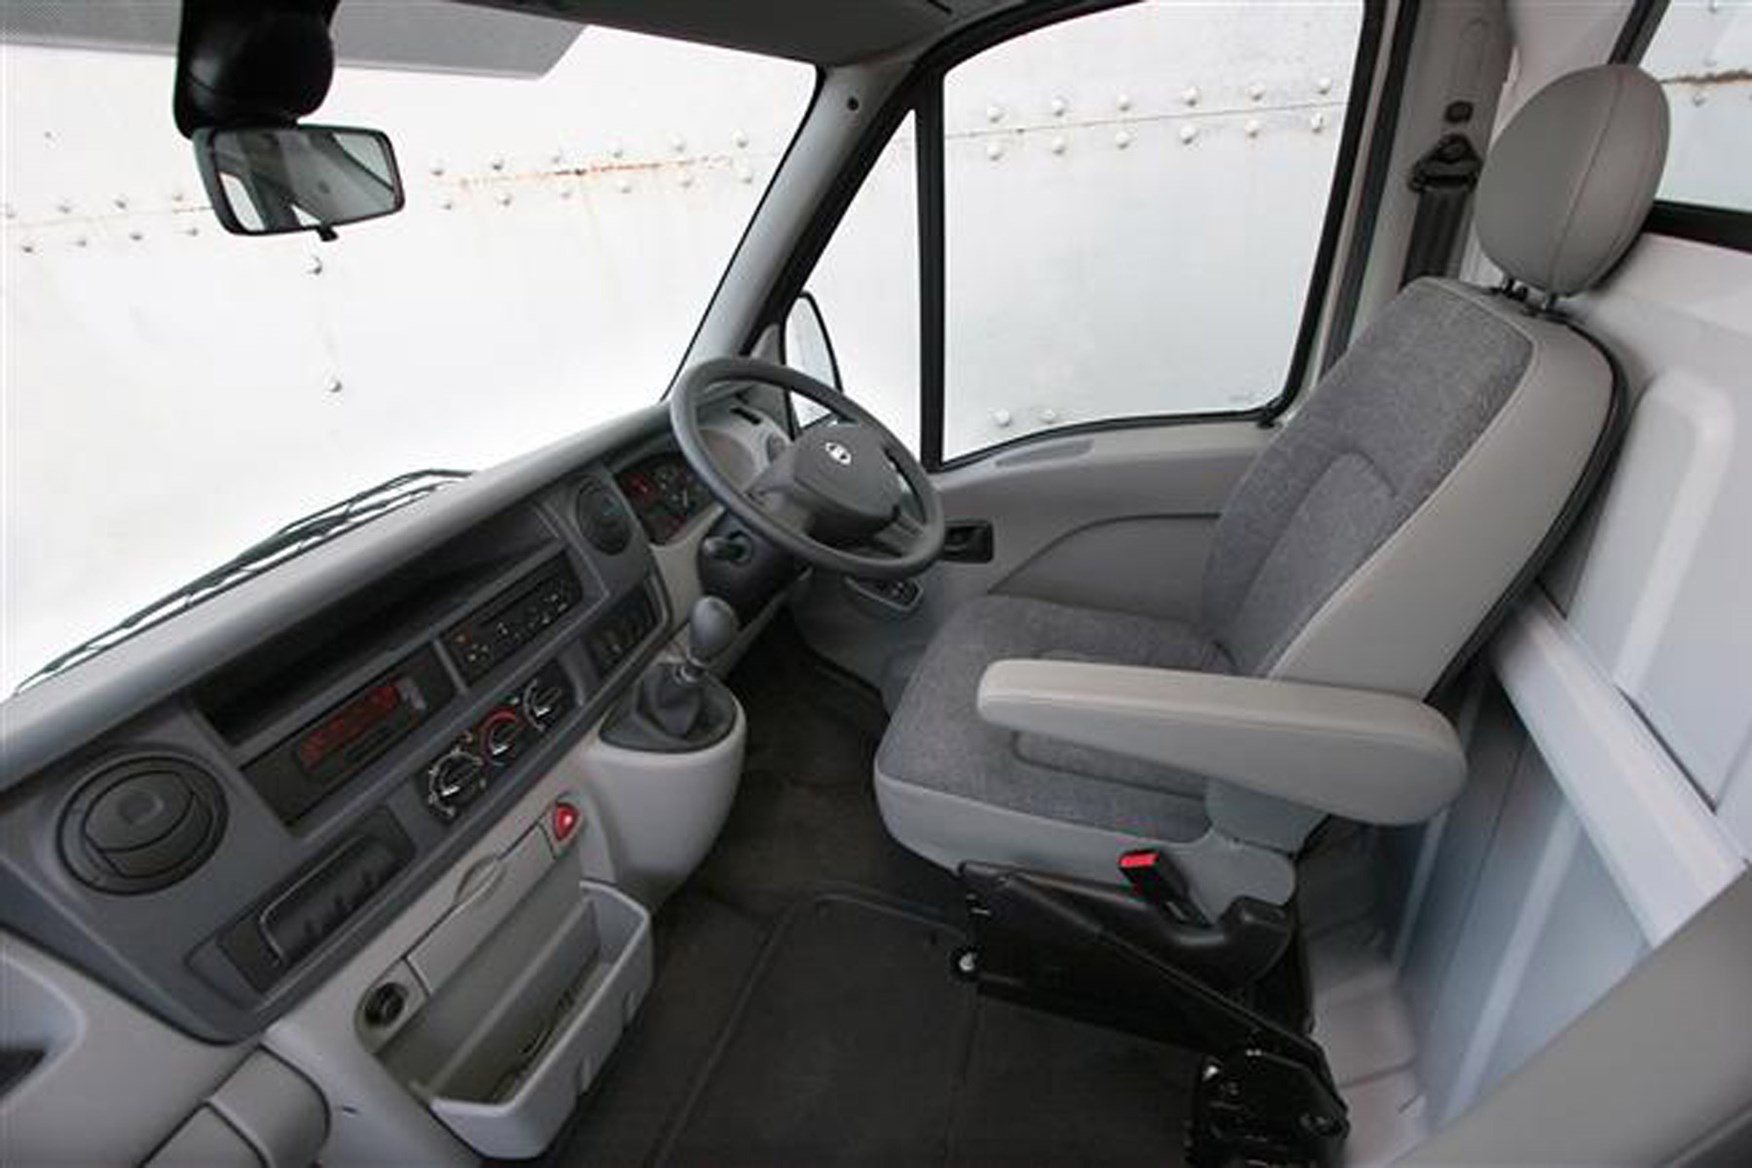 Nissan Interstar 2003-2011 review on Parkers Vans - interior, cabin